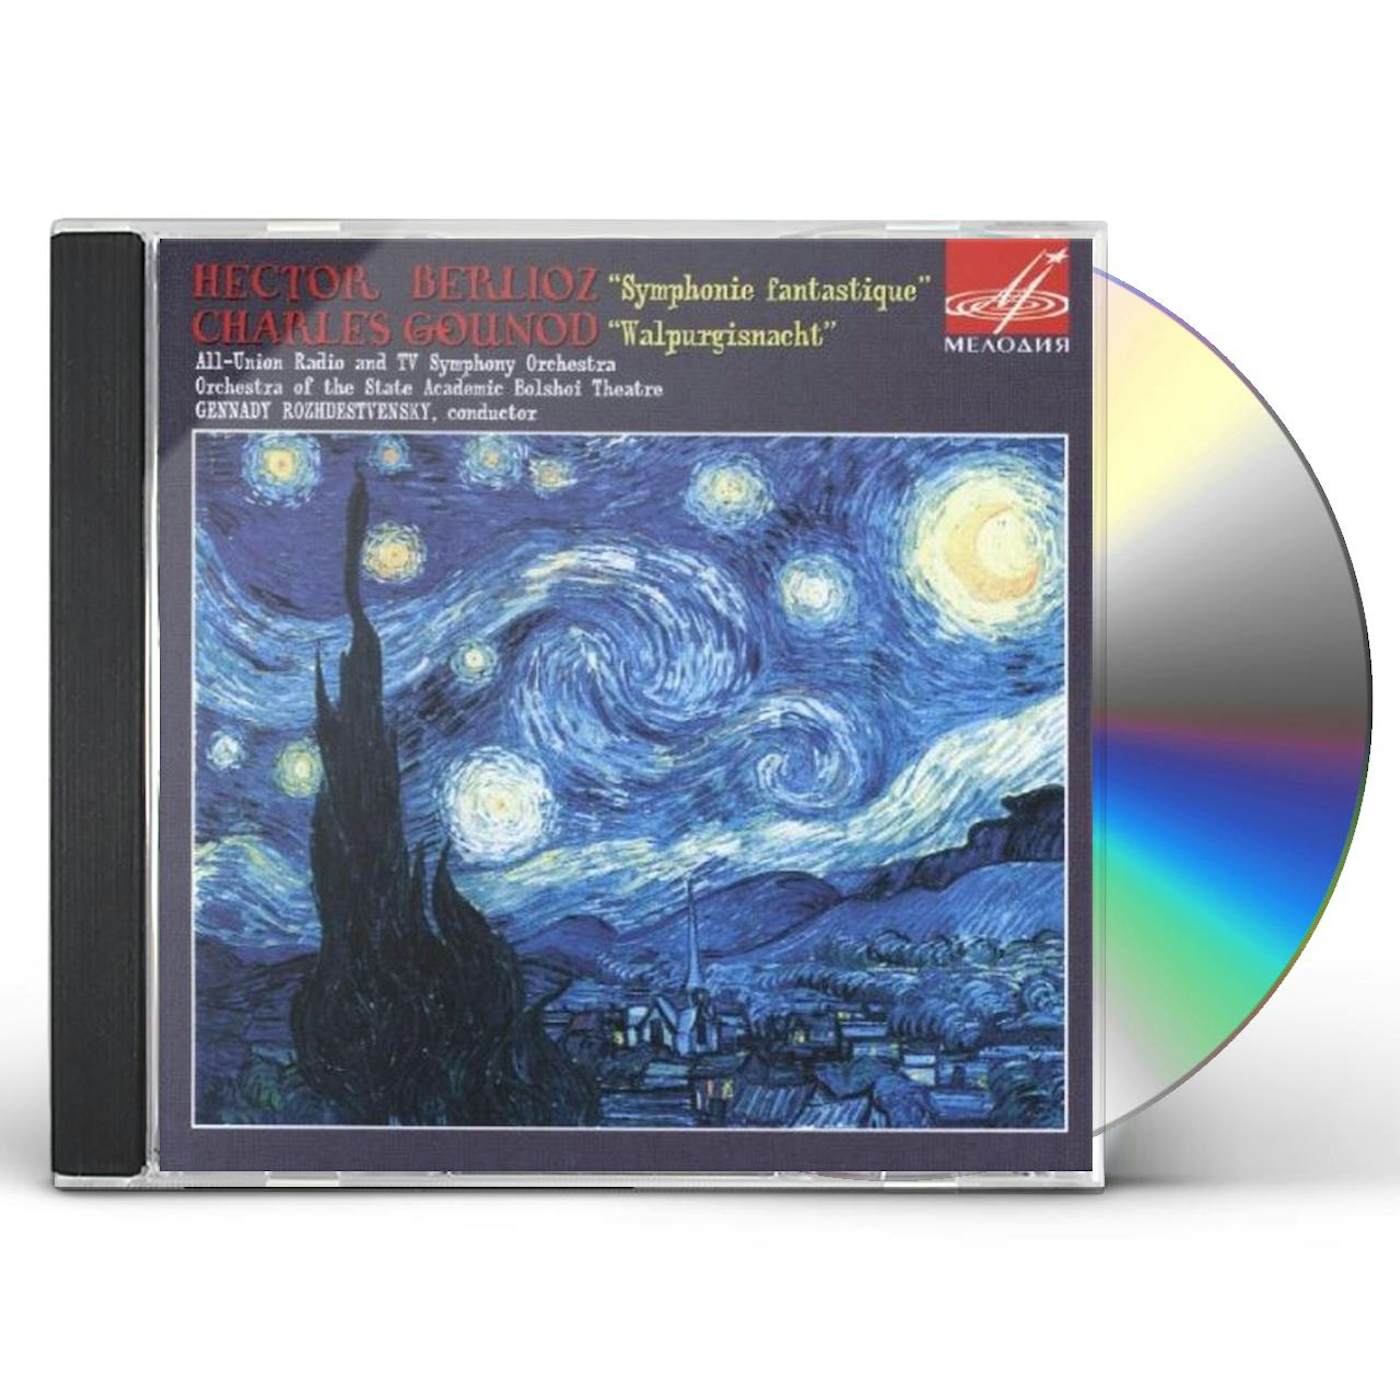 Berlioz SYMPHONIE FANTASTIQUE / WALPURG CD